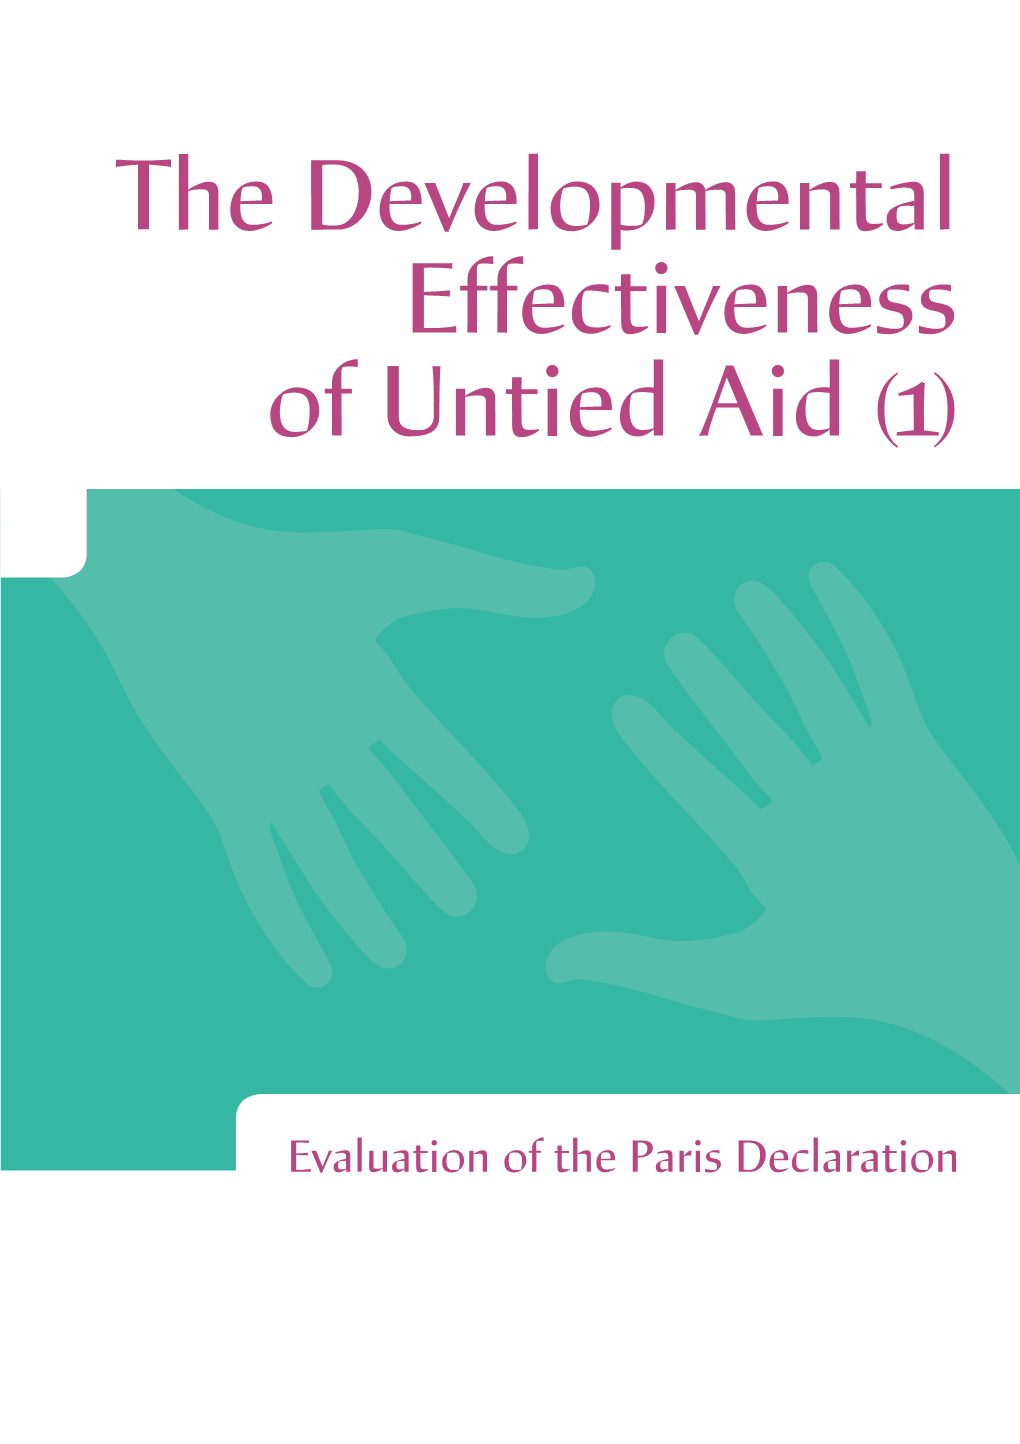 The Developmental Effectiveness of Untied Aid